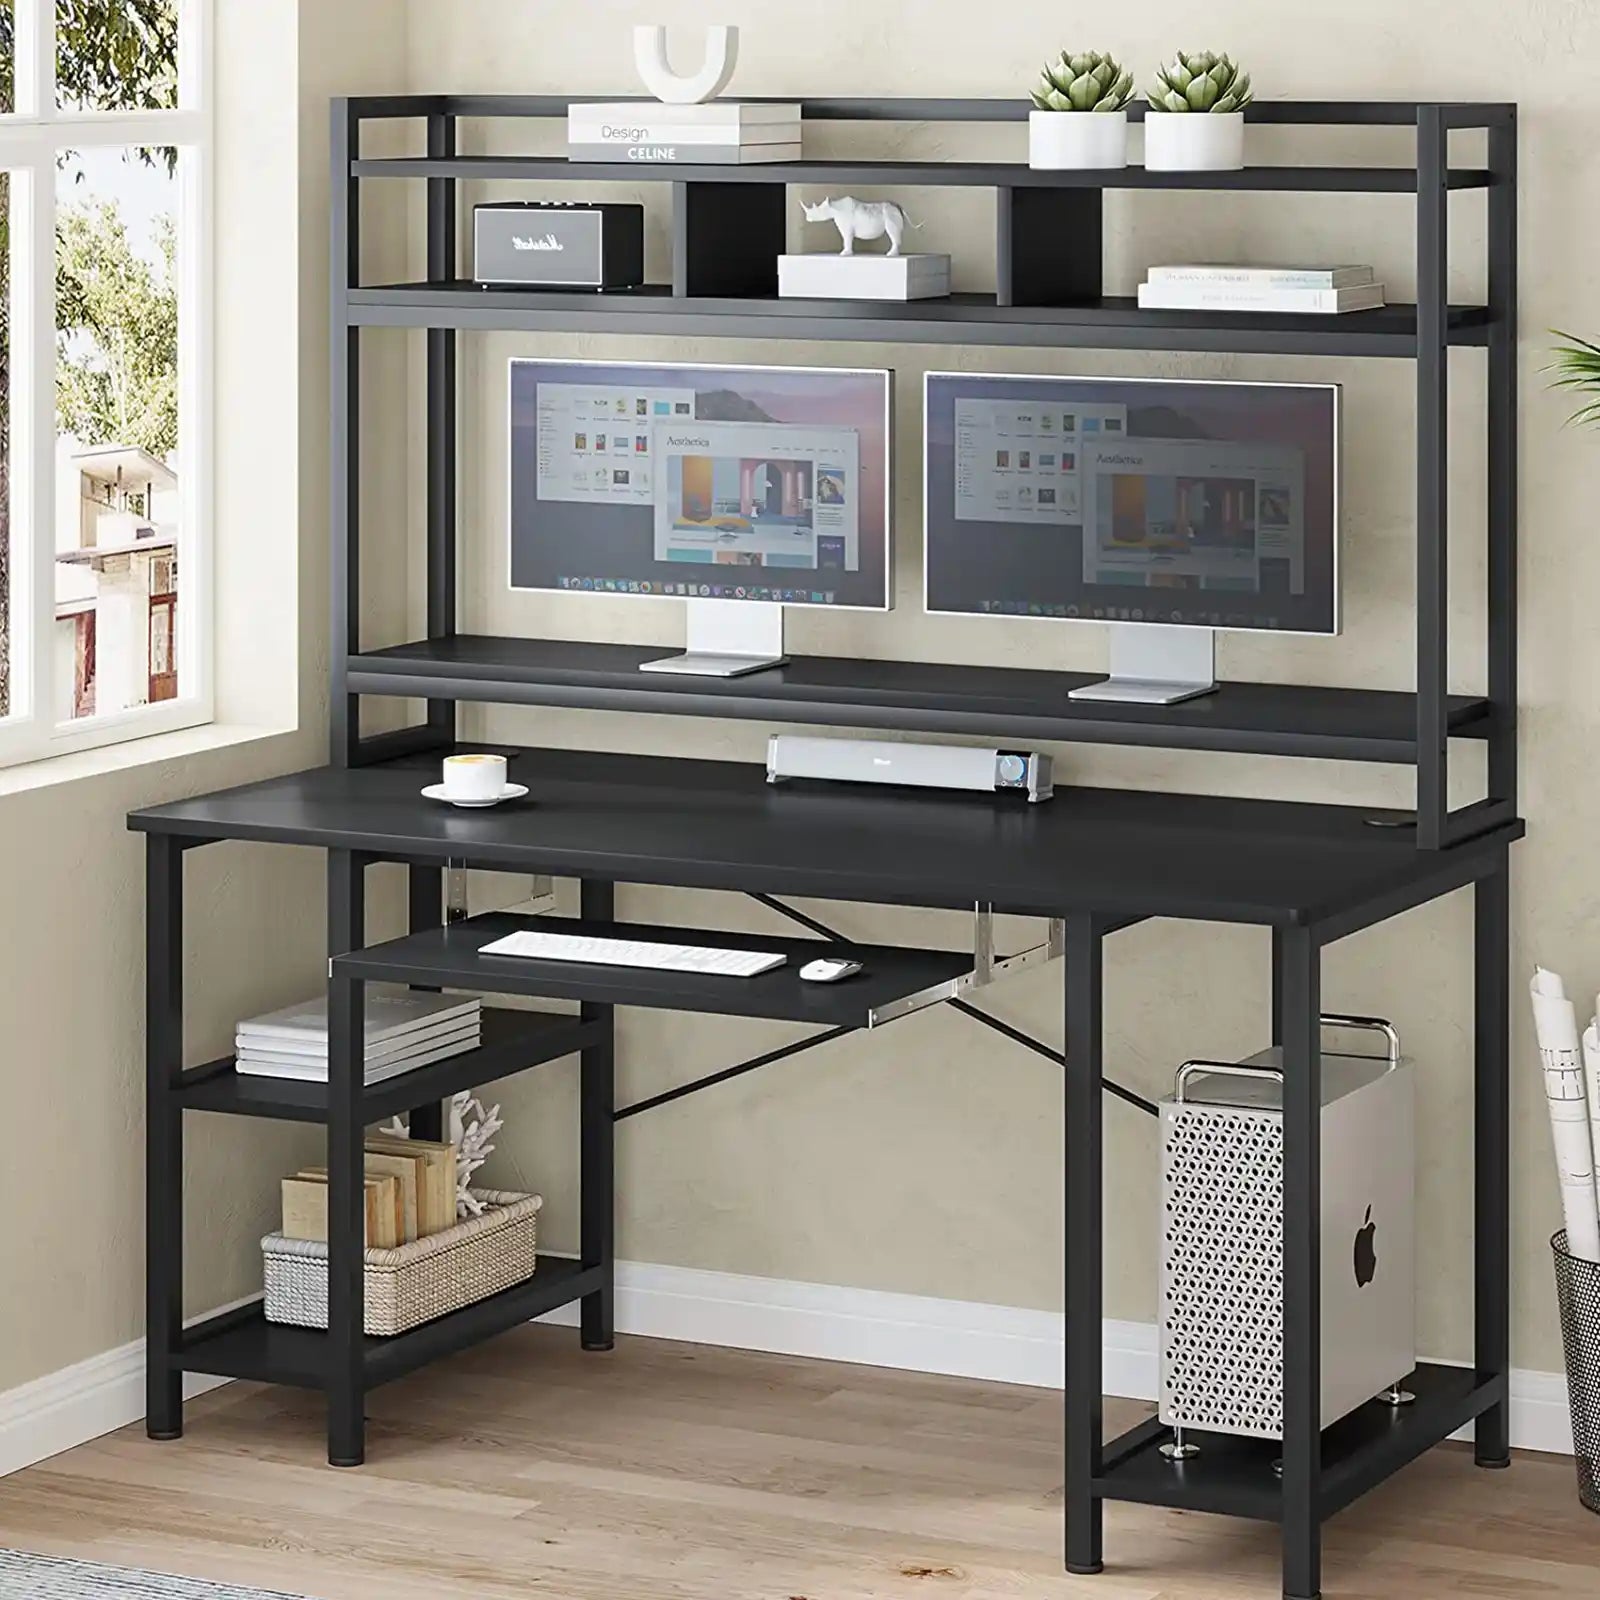 Home Office Desk with Adjustable Shelves and Storage, Bookshelf